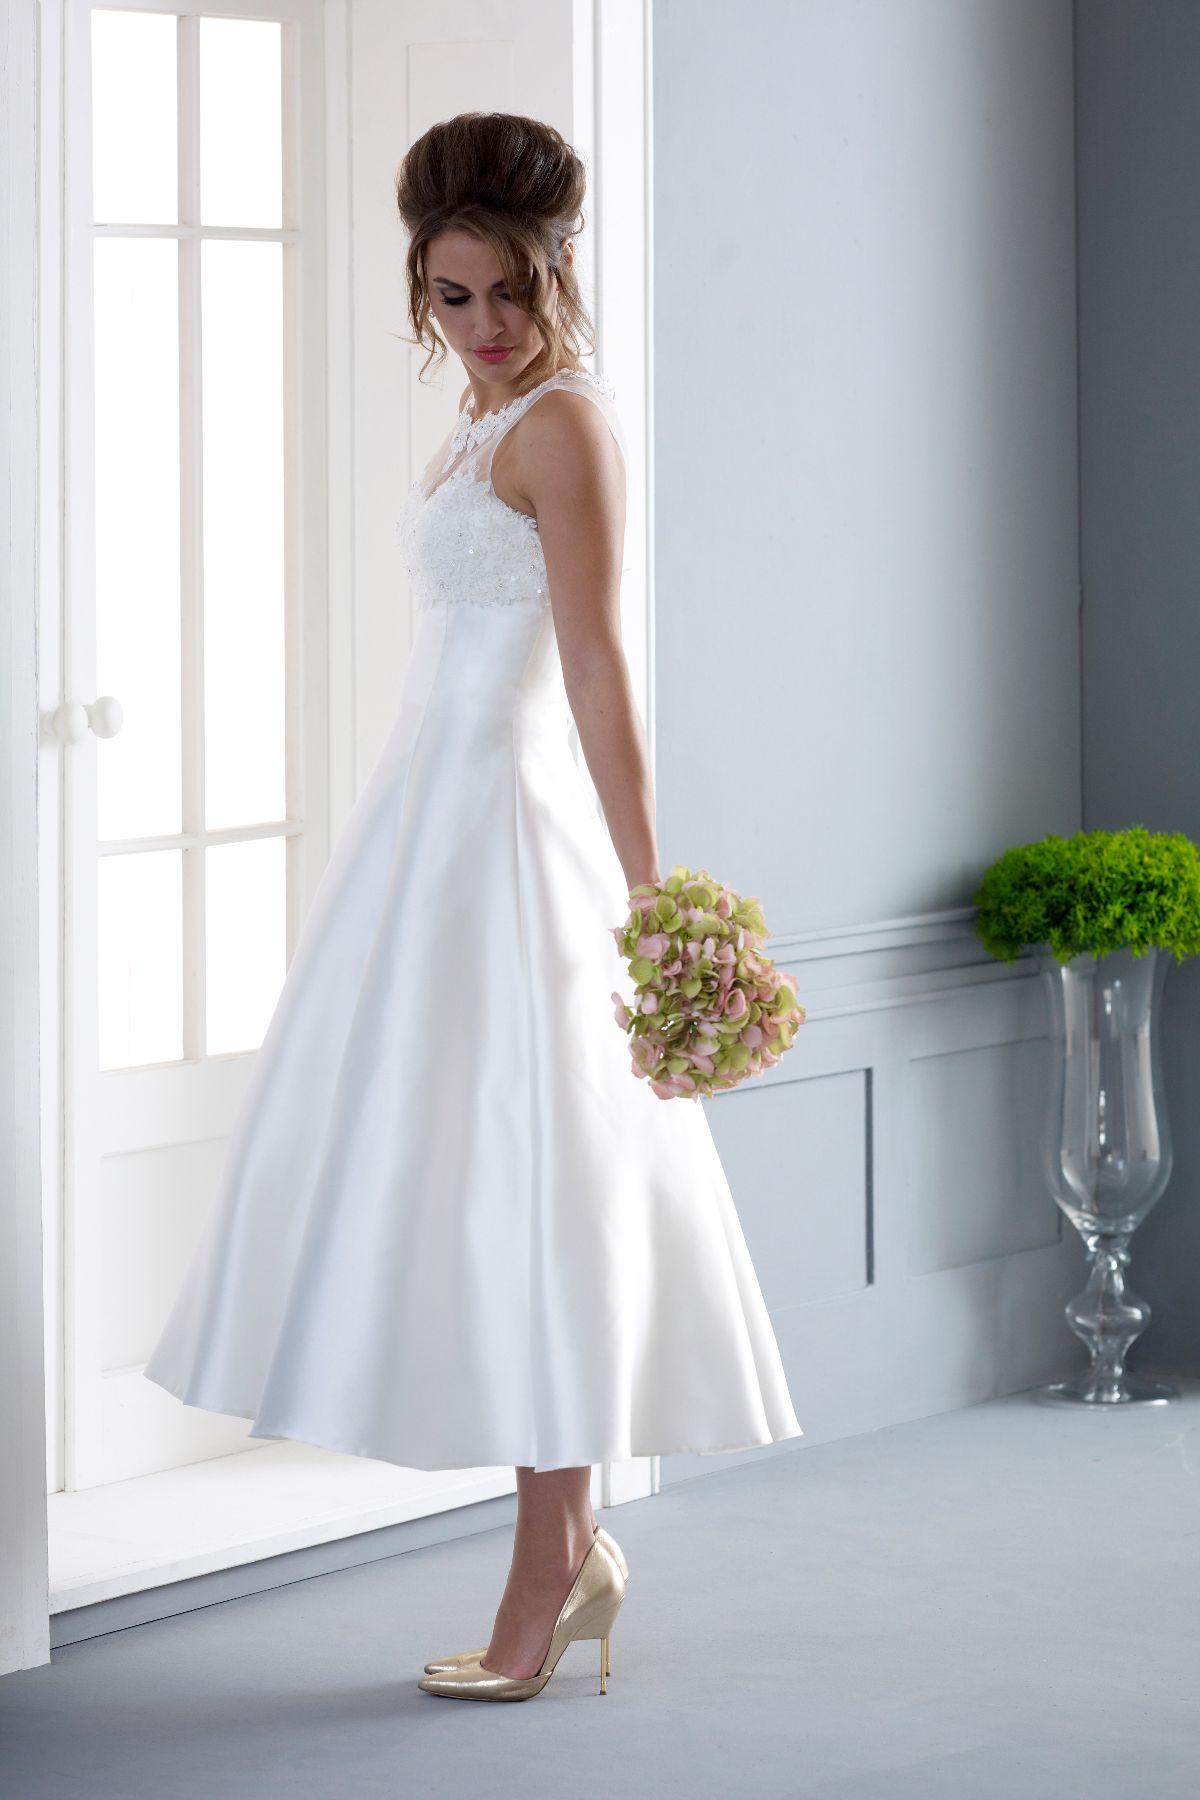 Best Dress 2 Impress Bridal-Image-101